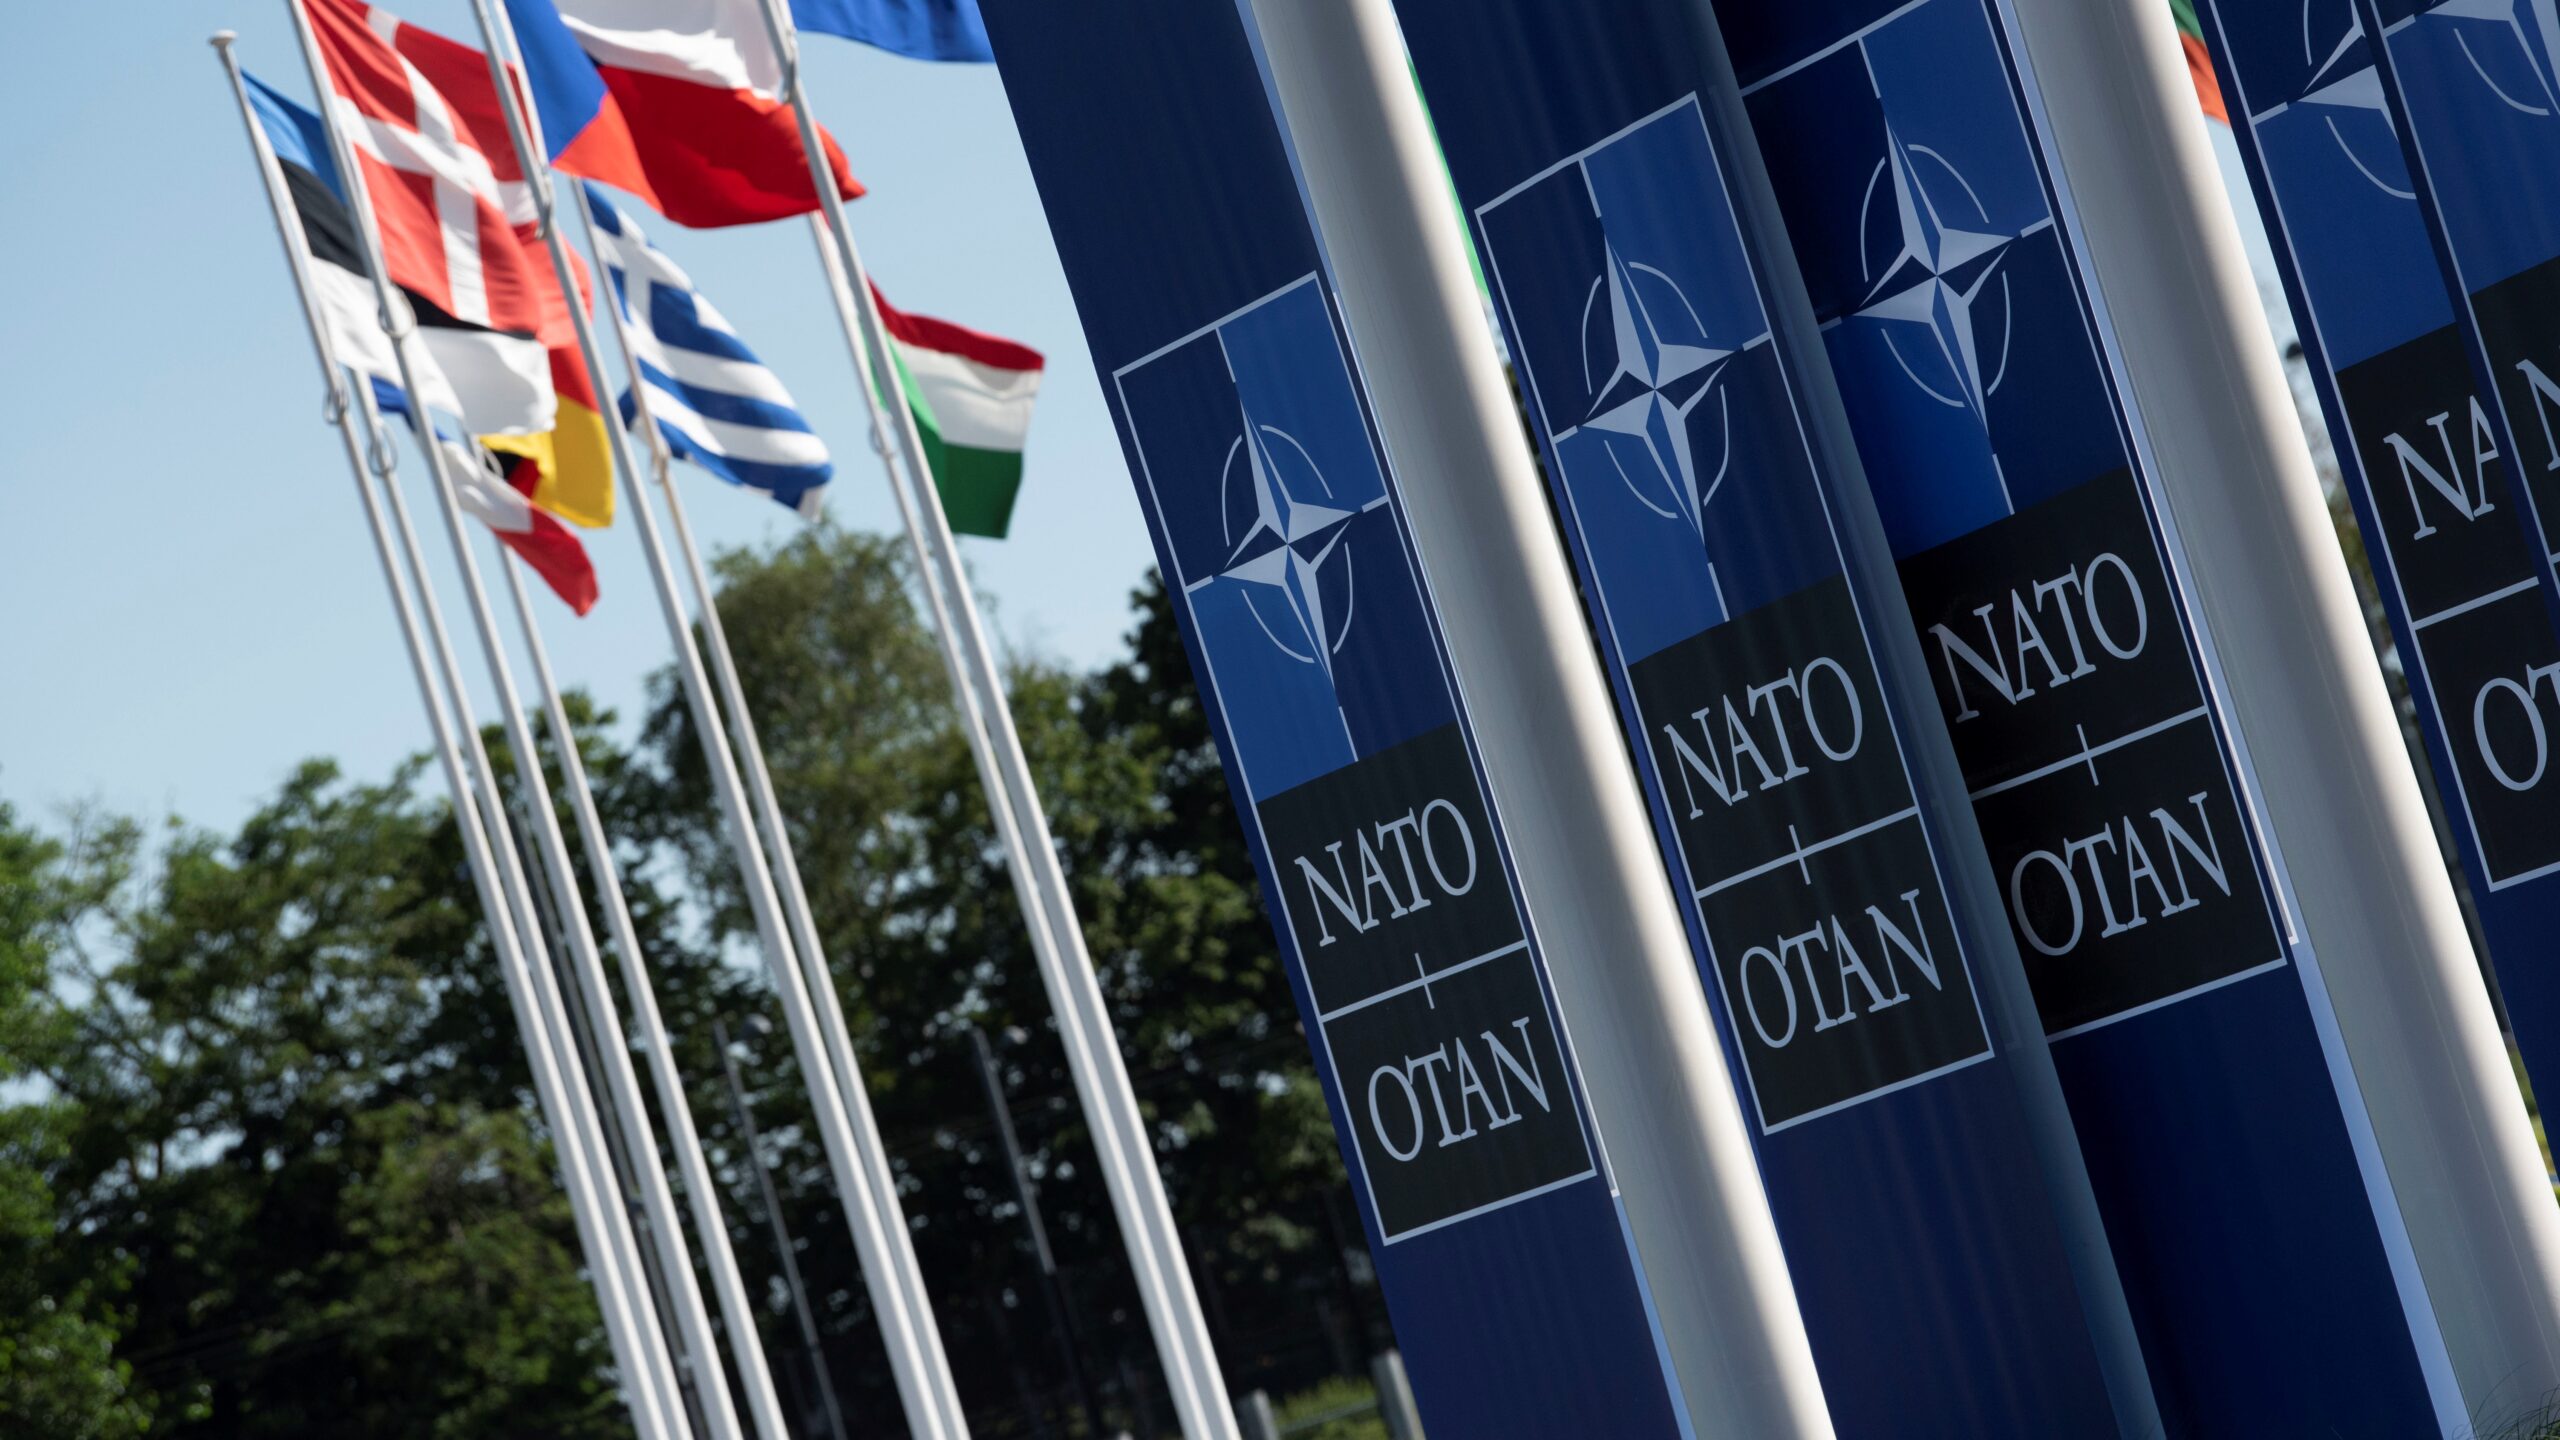 Echoes of Spain’s NATO membership in Swedish, Finnish bids